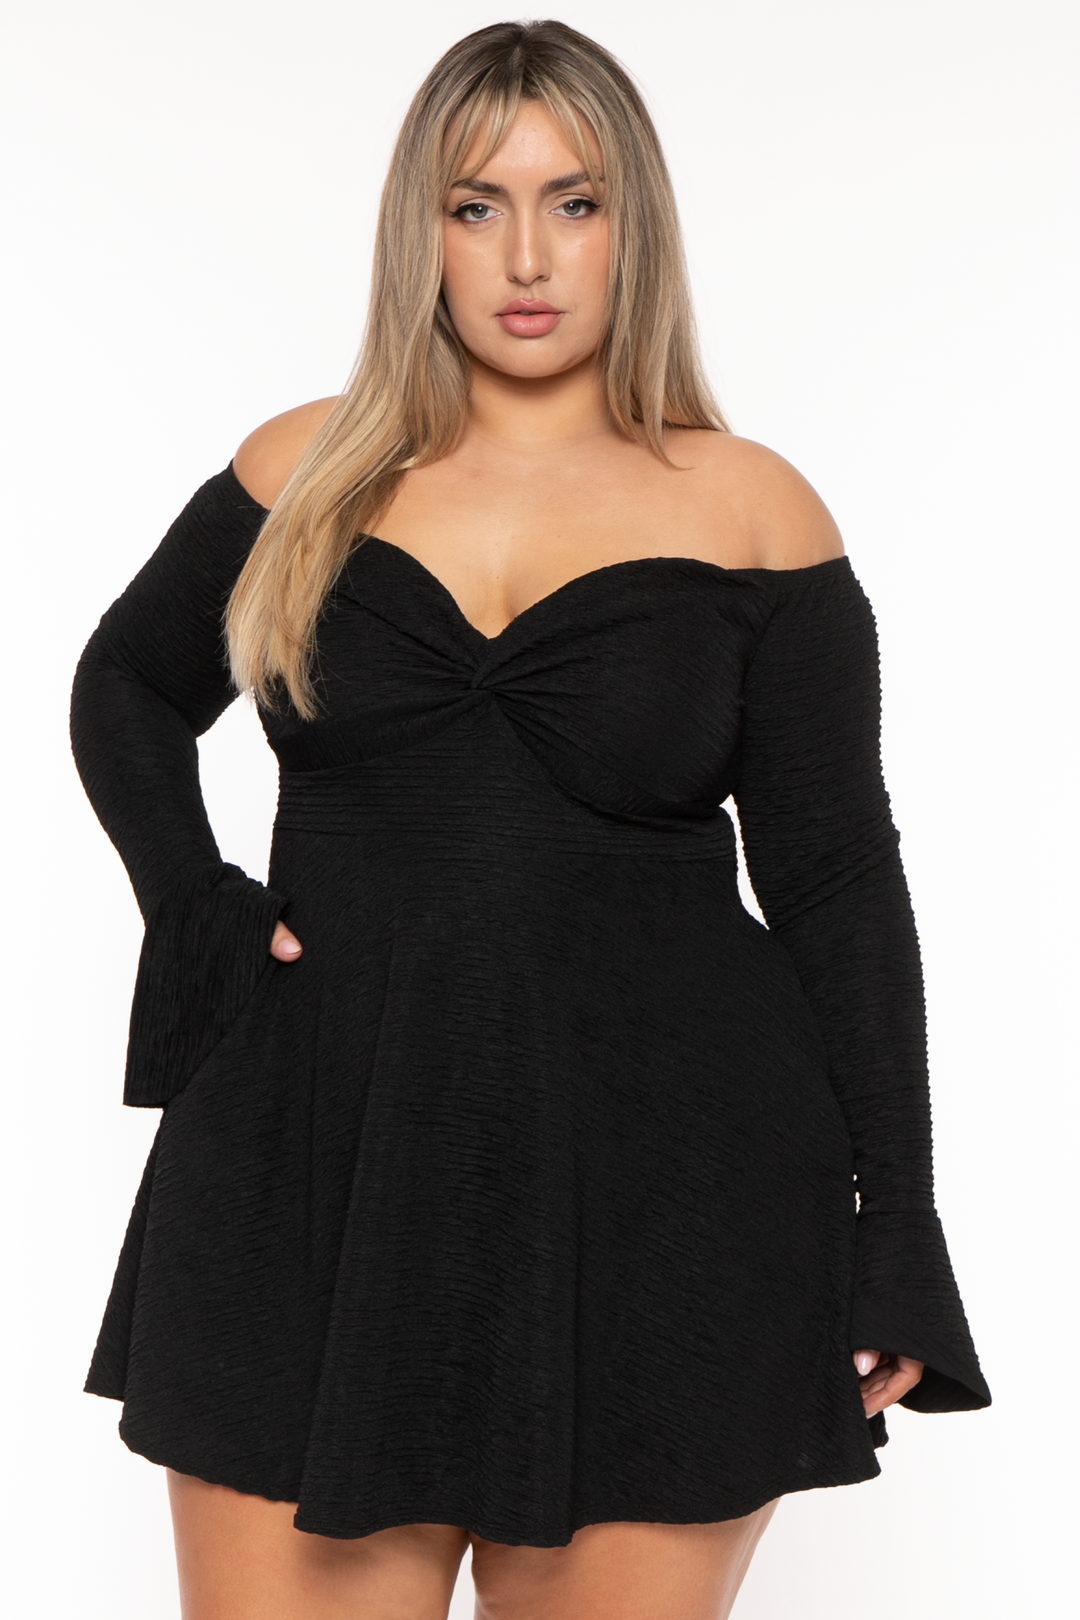 Curvy Sense Dresses 1X / Black Plus Size Marilu Front Twist Flare Dress - Black